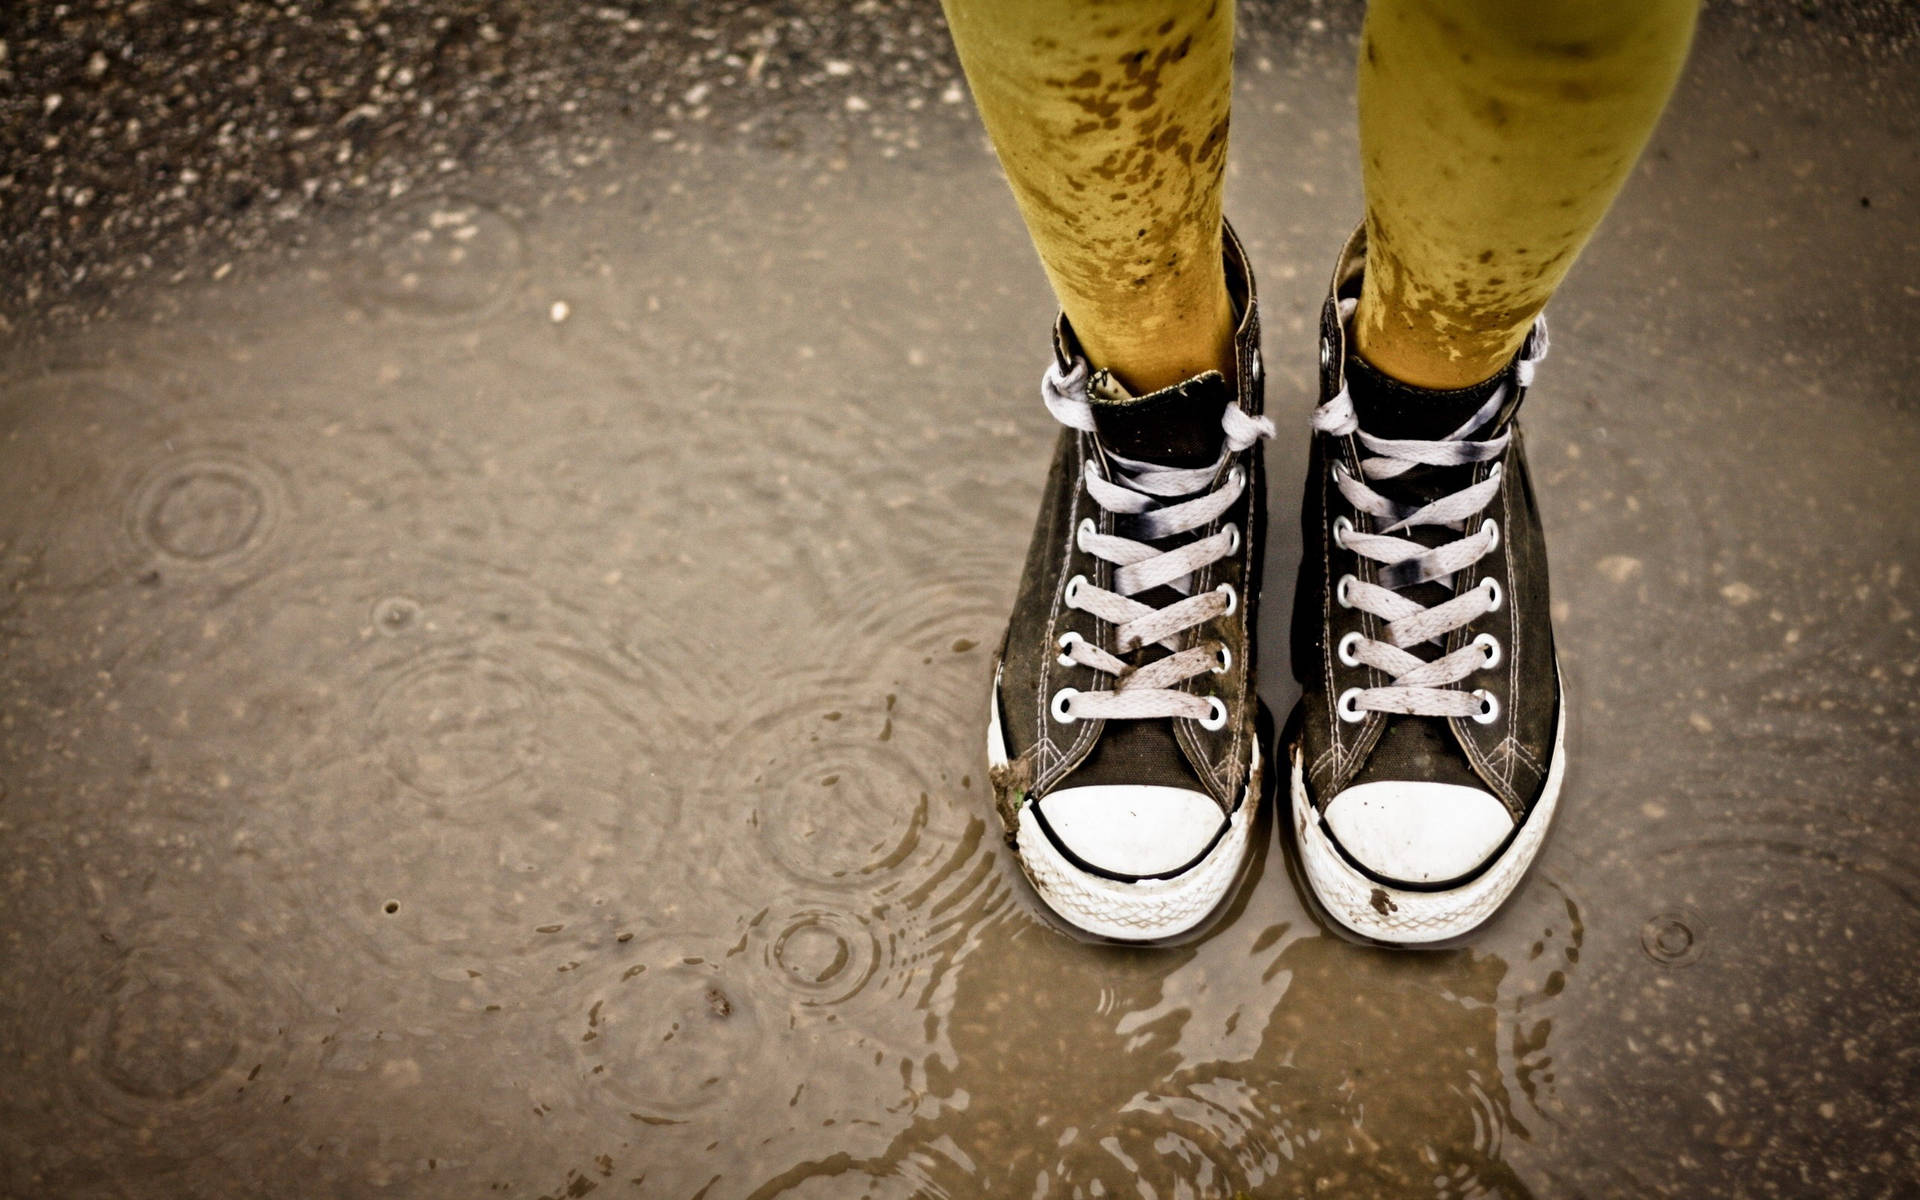 Sneaker On Rain Puddle